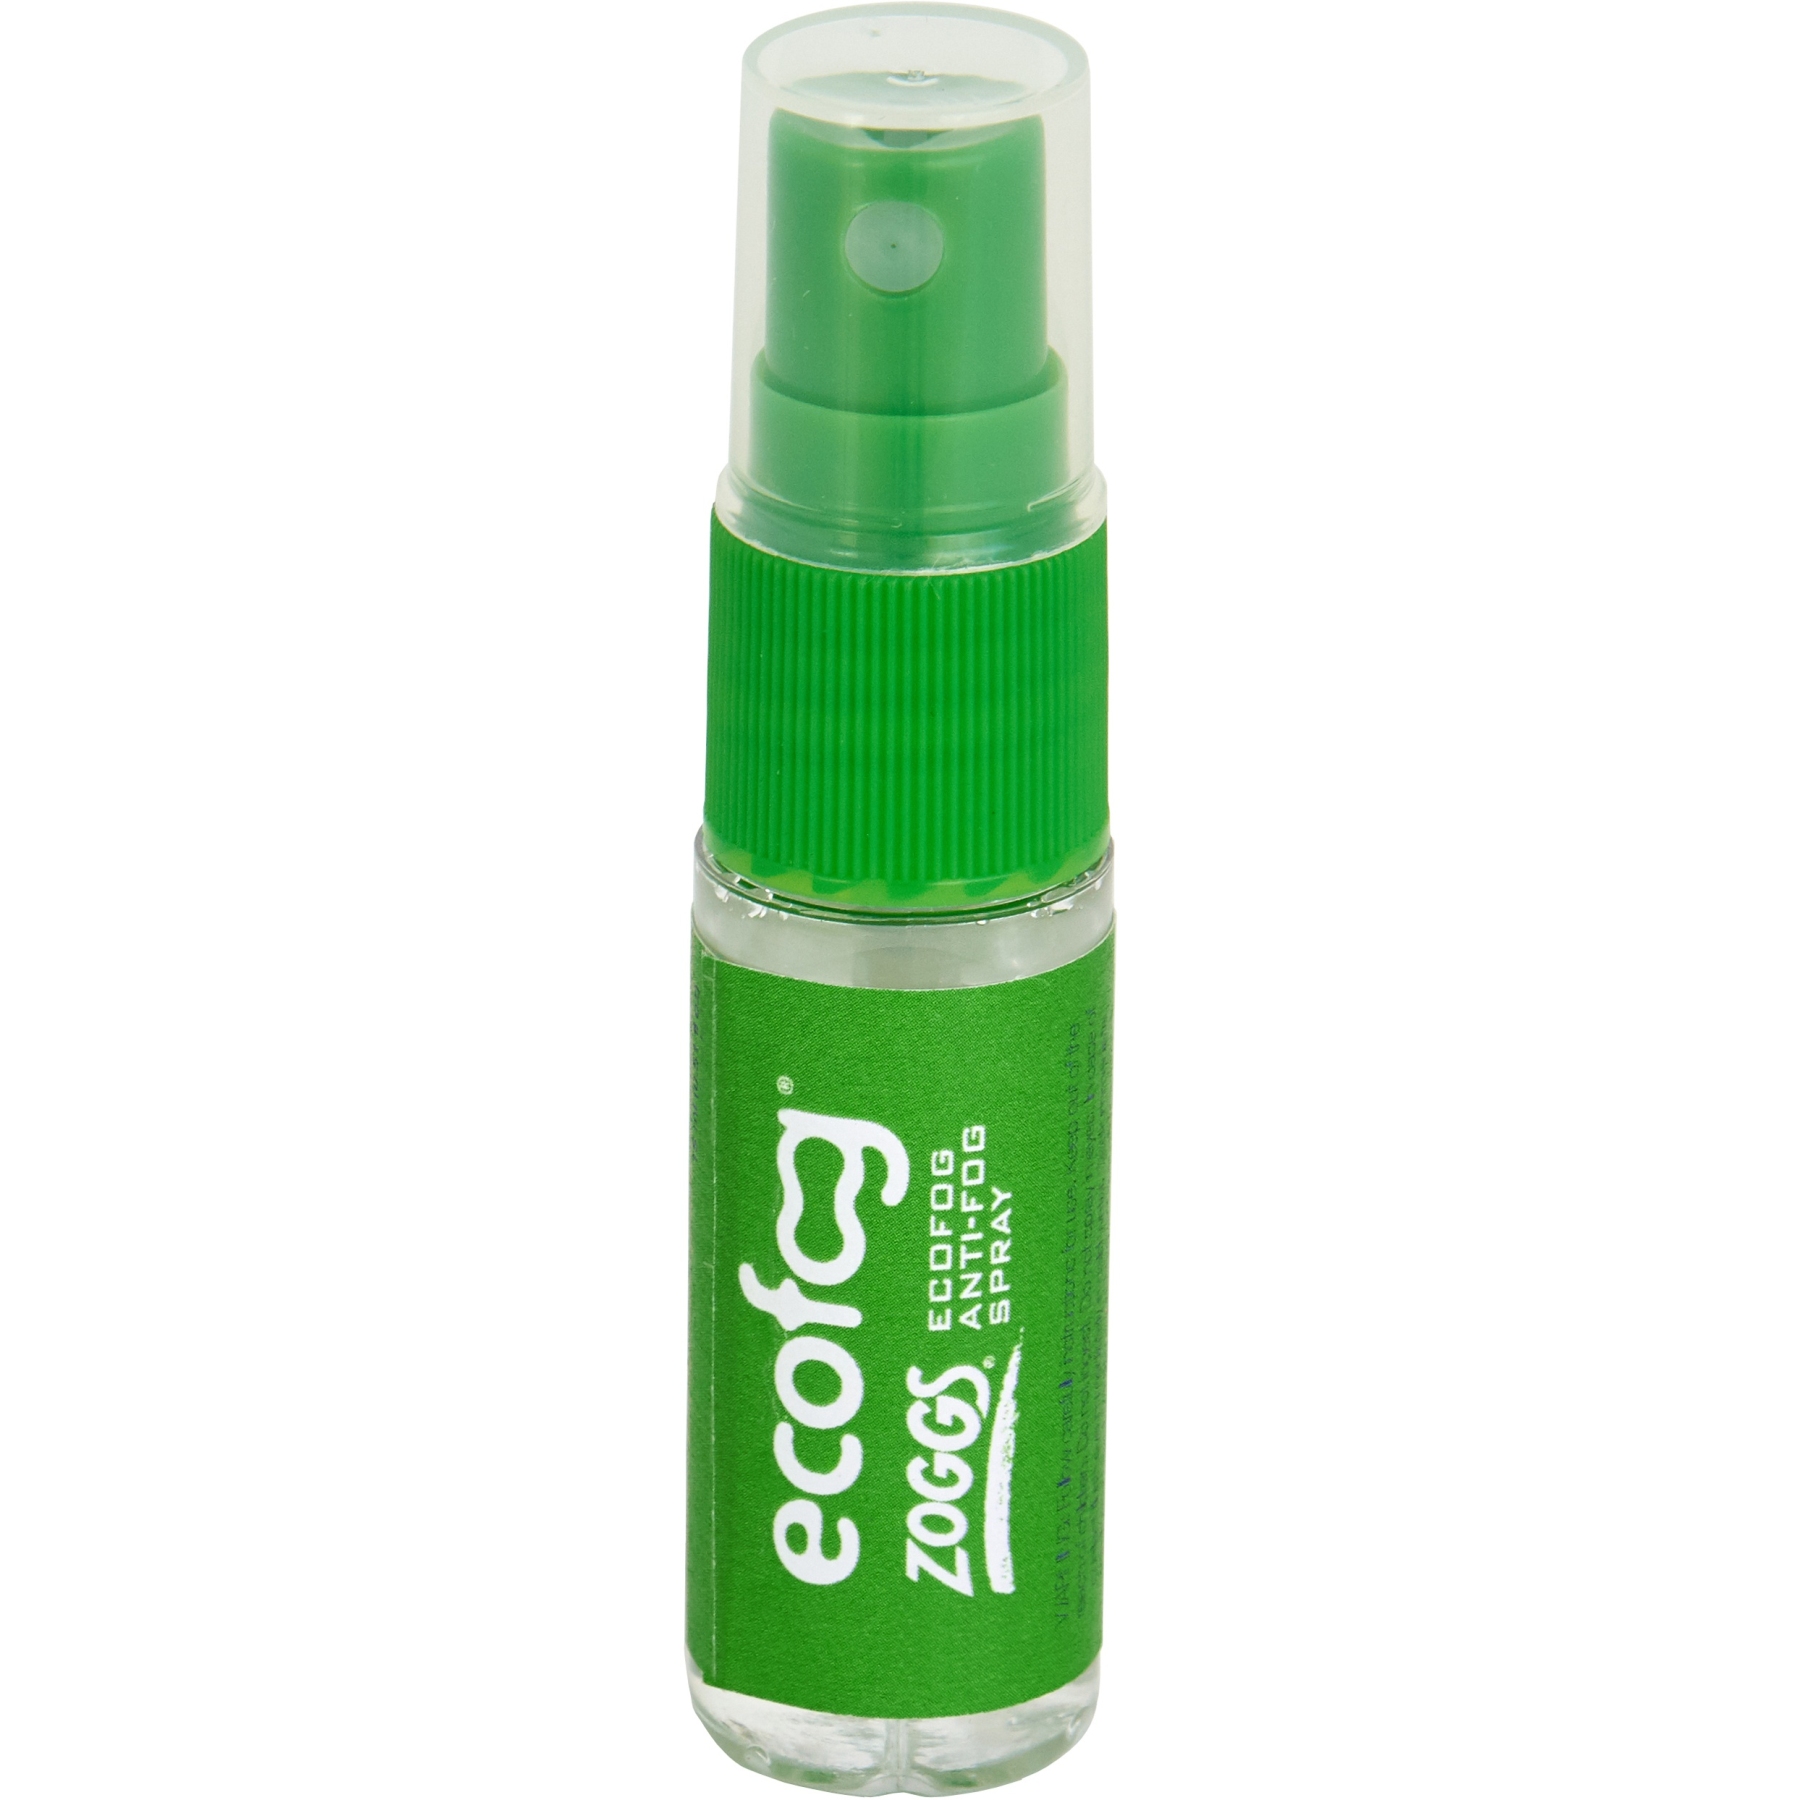 Image of Zoggs ECOFOG Anti-fog spray